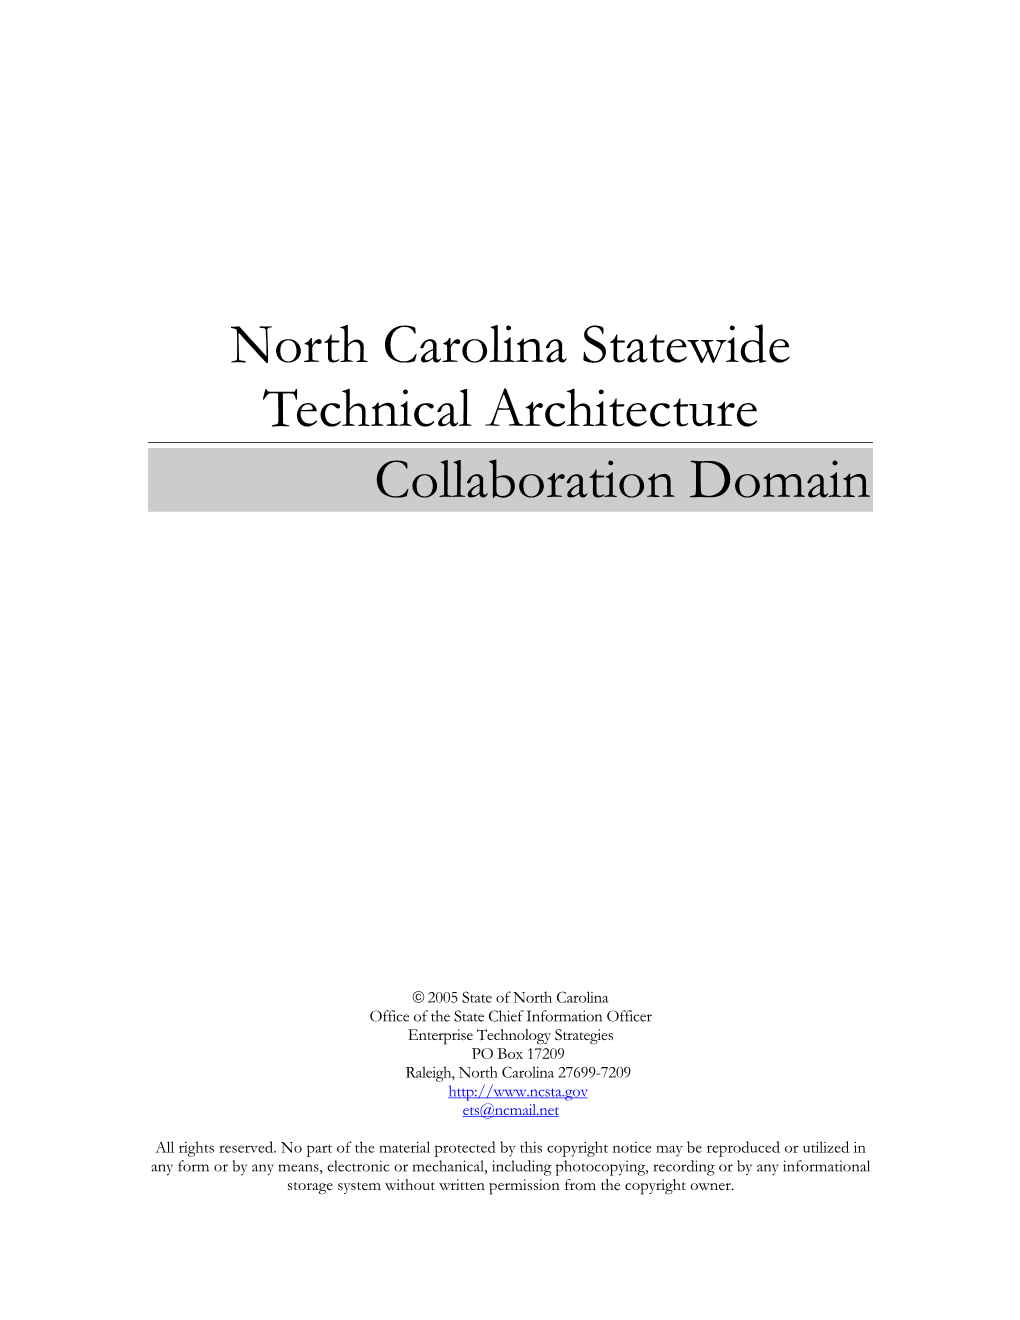 North Carolina Statewide Technical Architecture Collaboration Domain